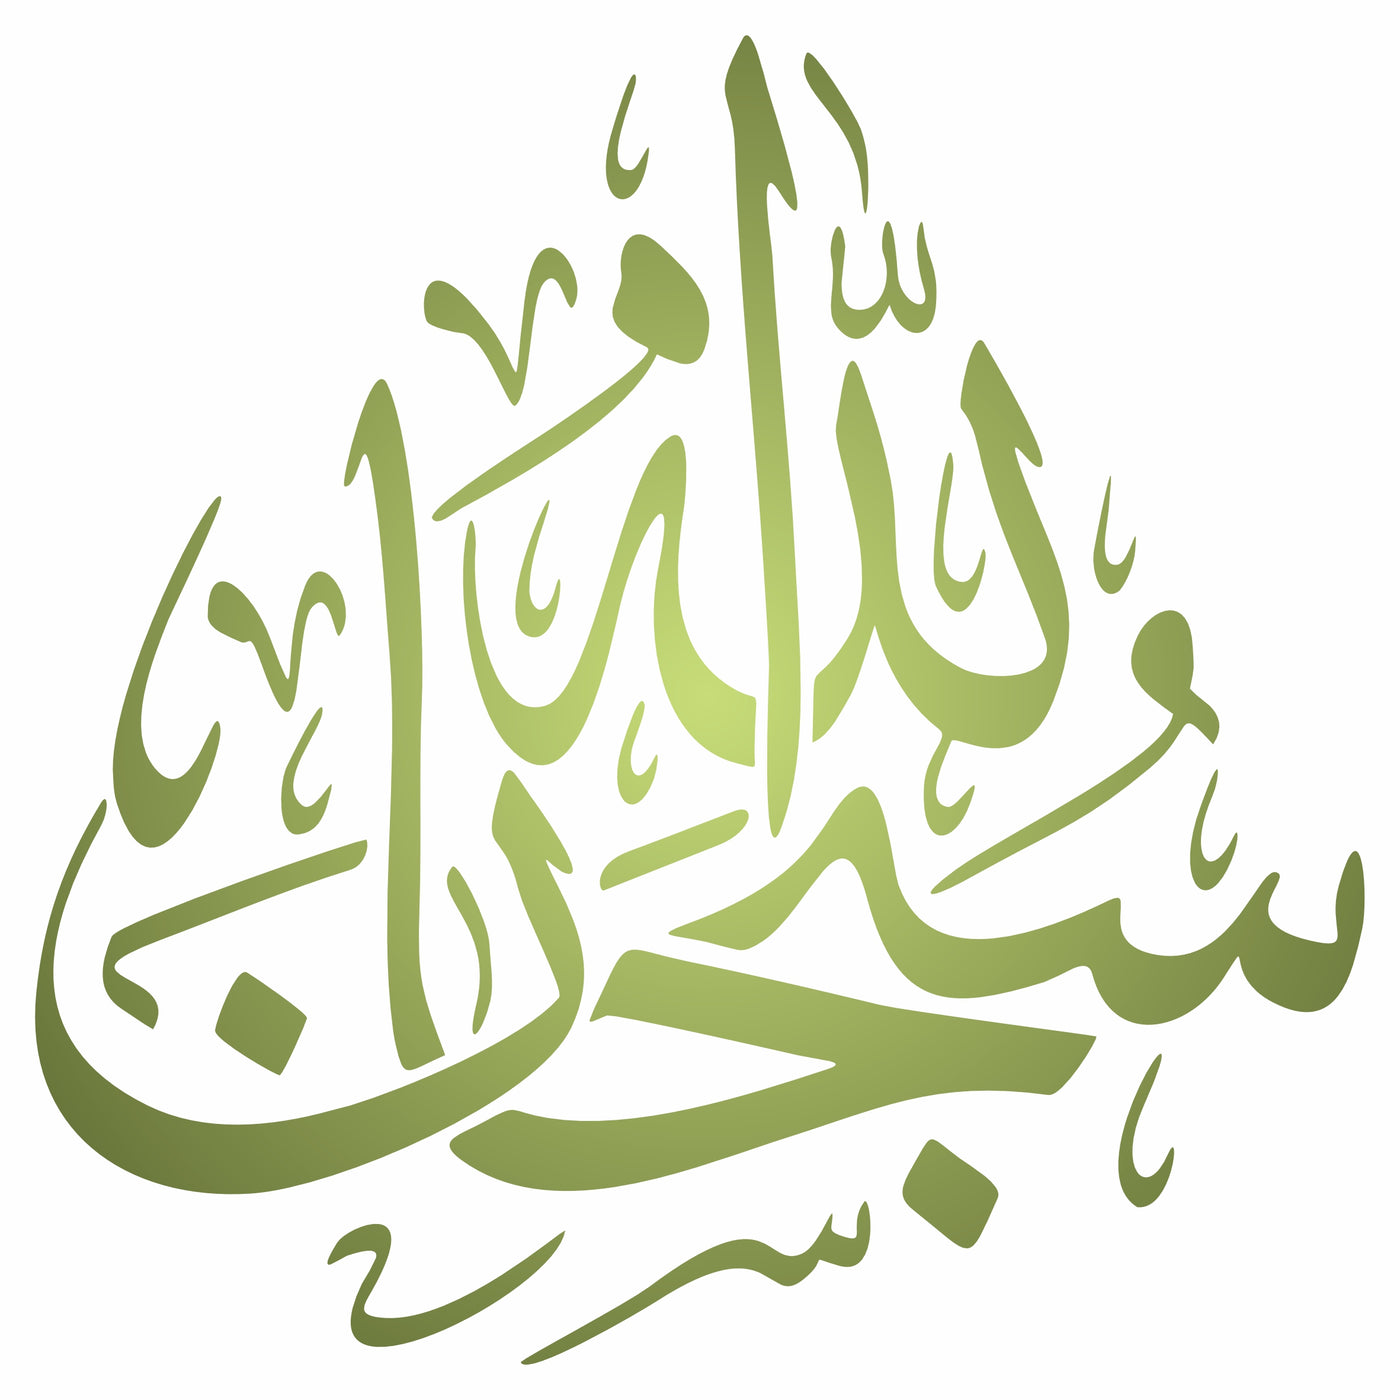 Tasbih Islamic Art Stencil - Subhan Allah Glory be to God Arabic Calligraphy